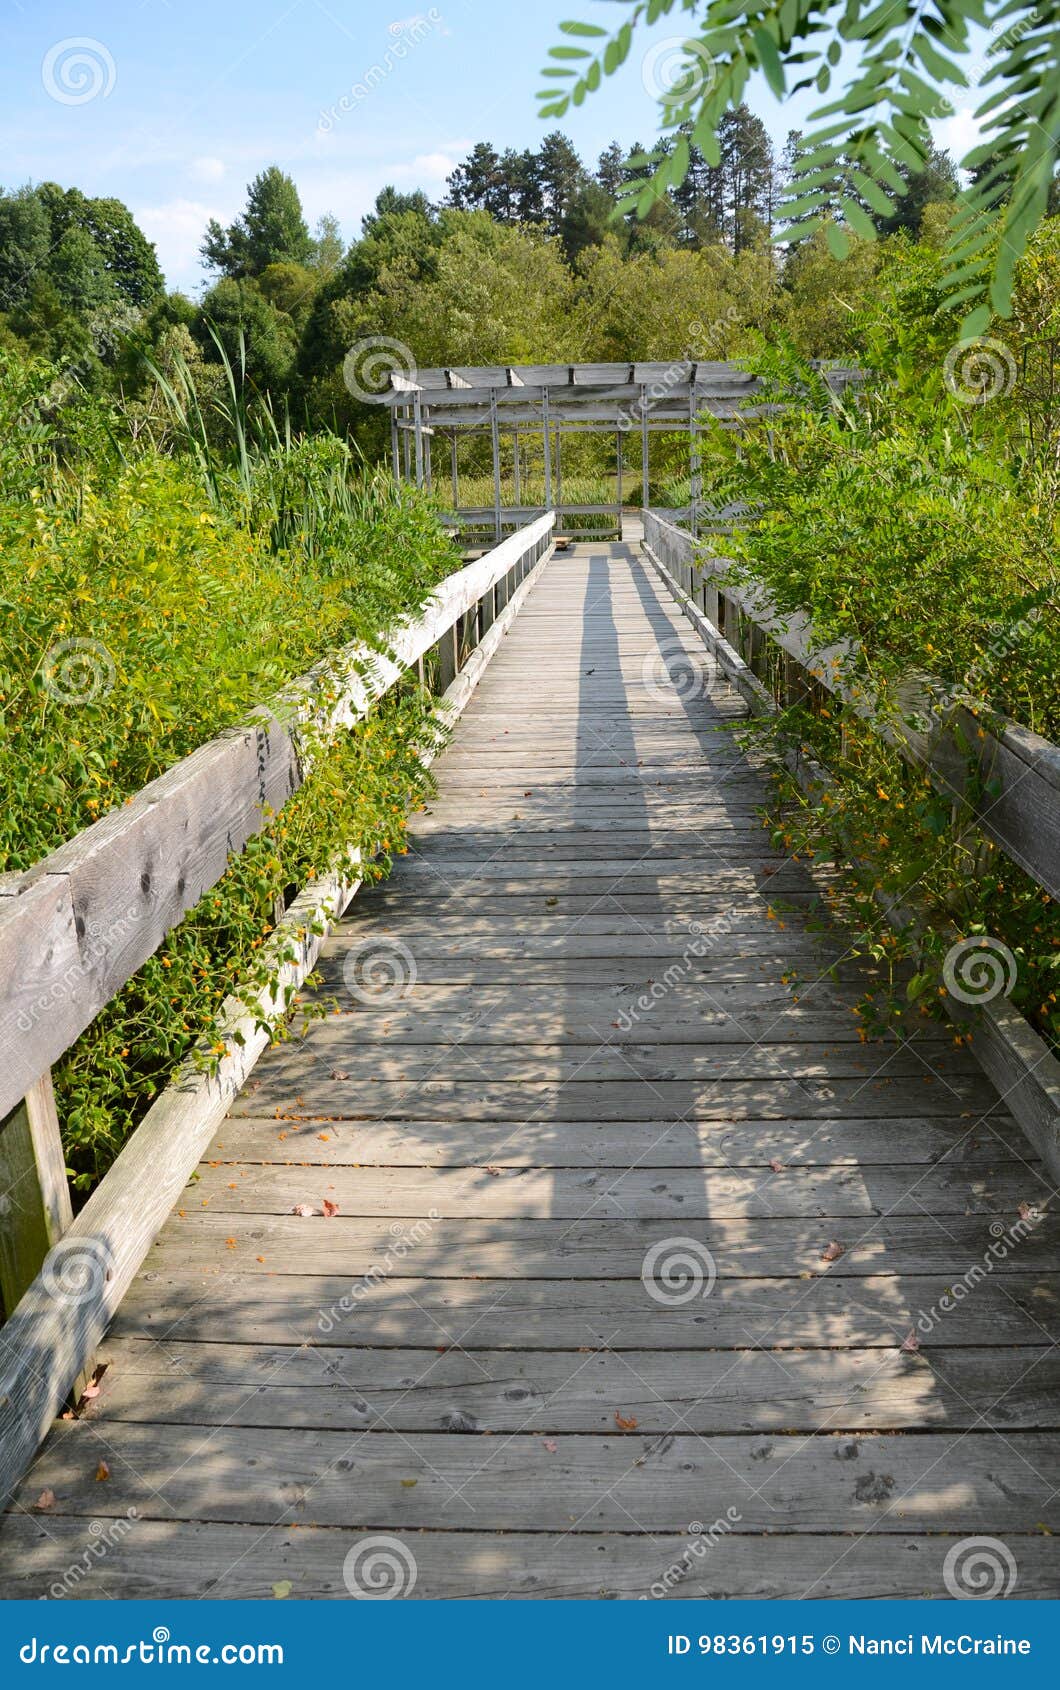 Cornell Botanic Gardens Houston Pond Boardwalk Stock Image